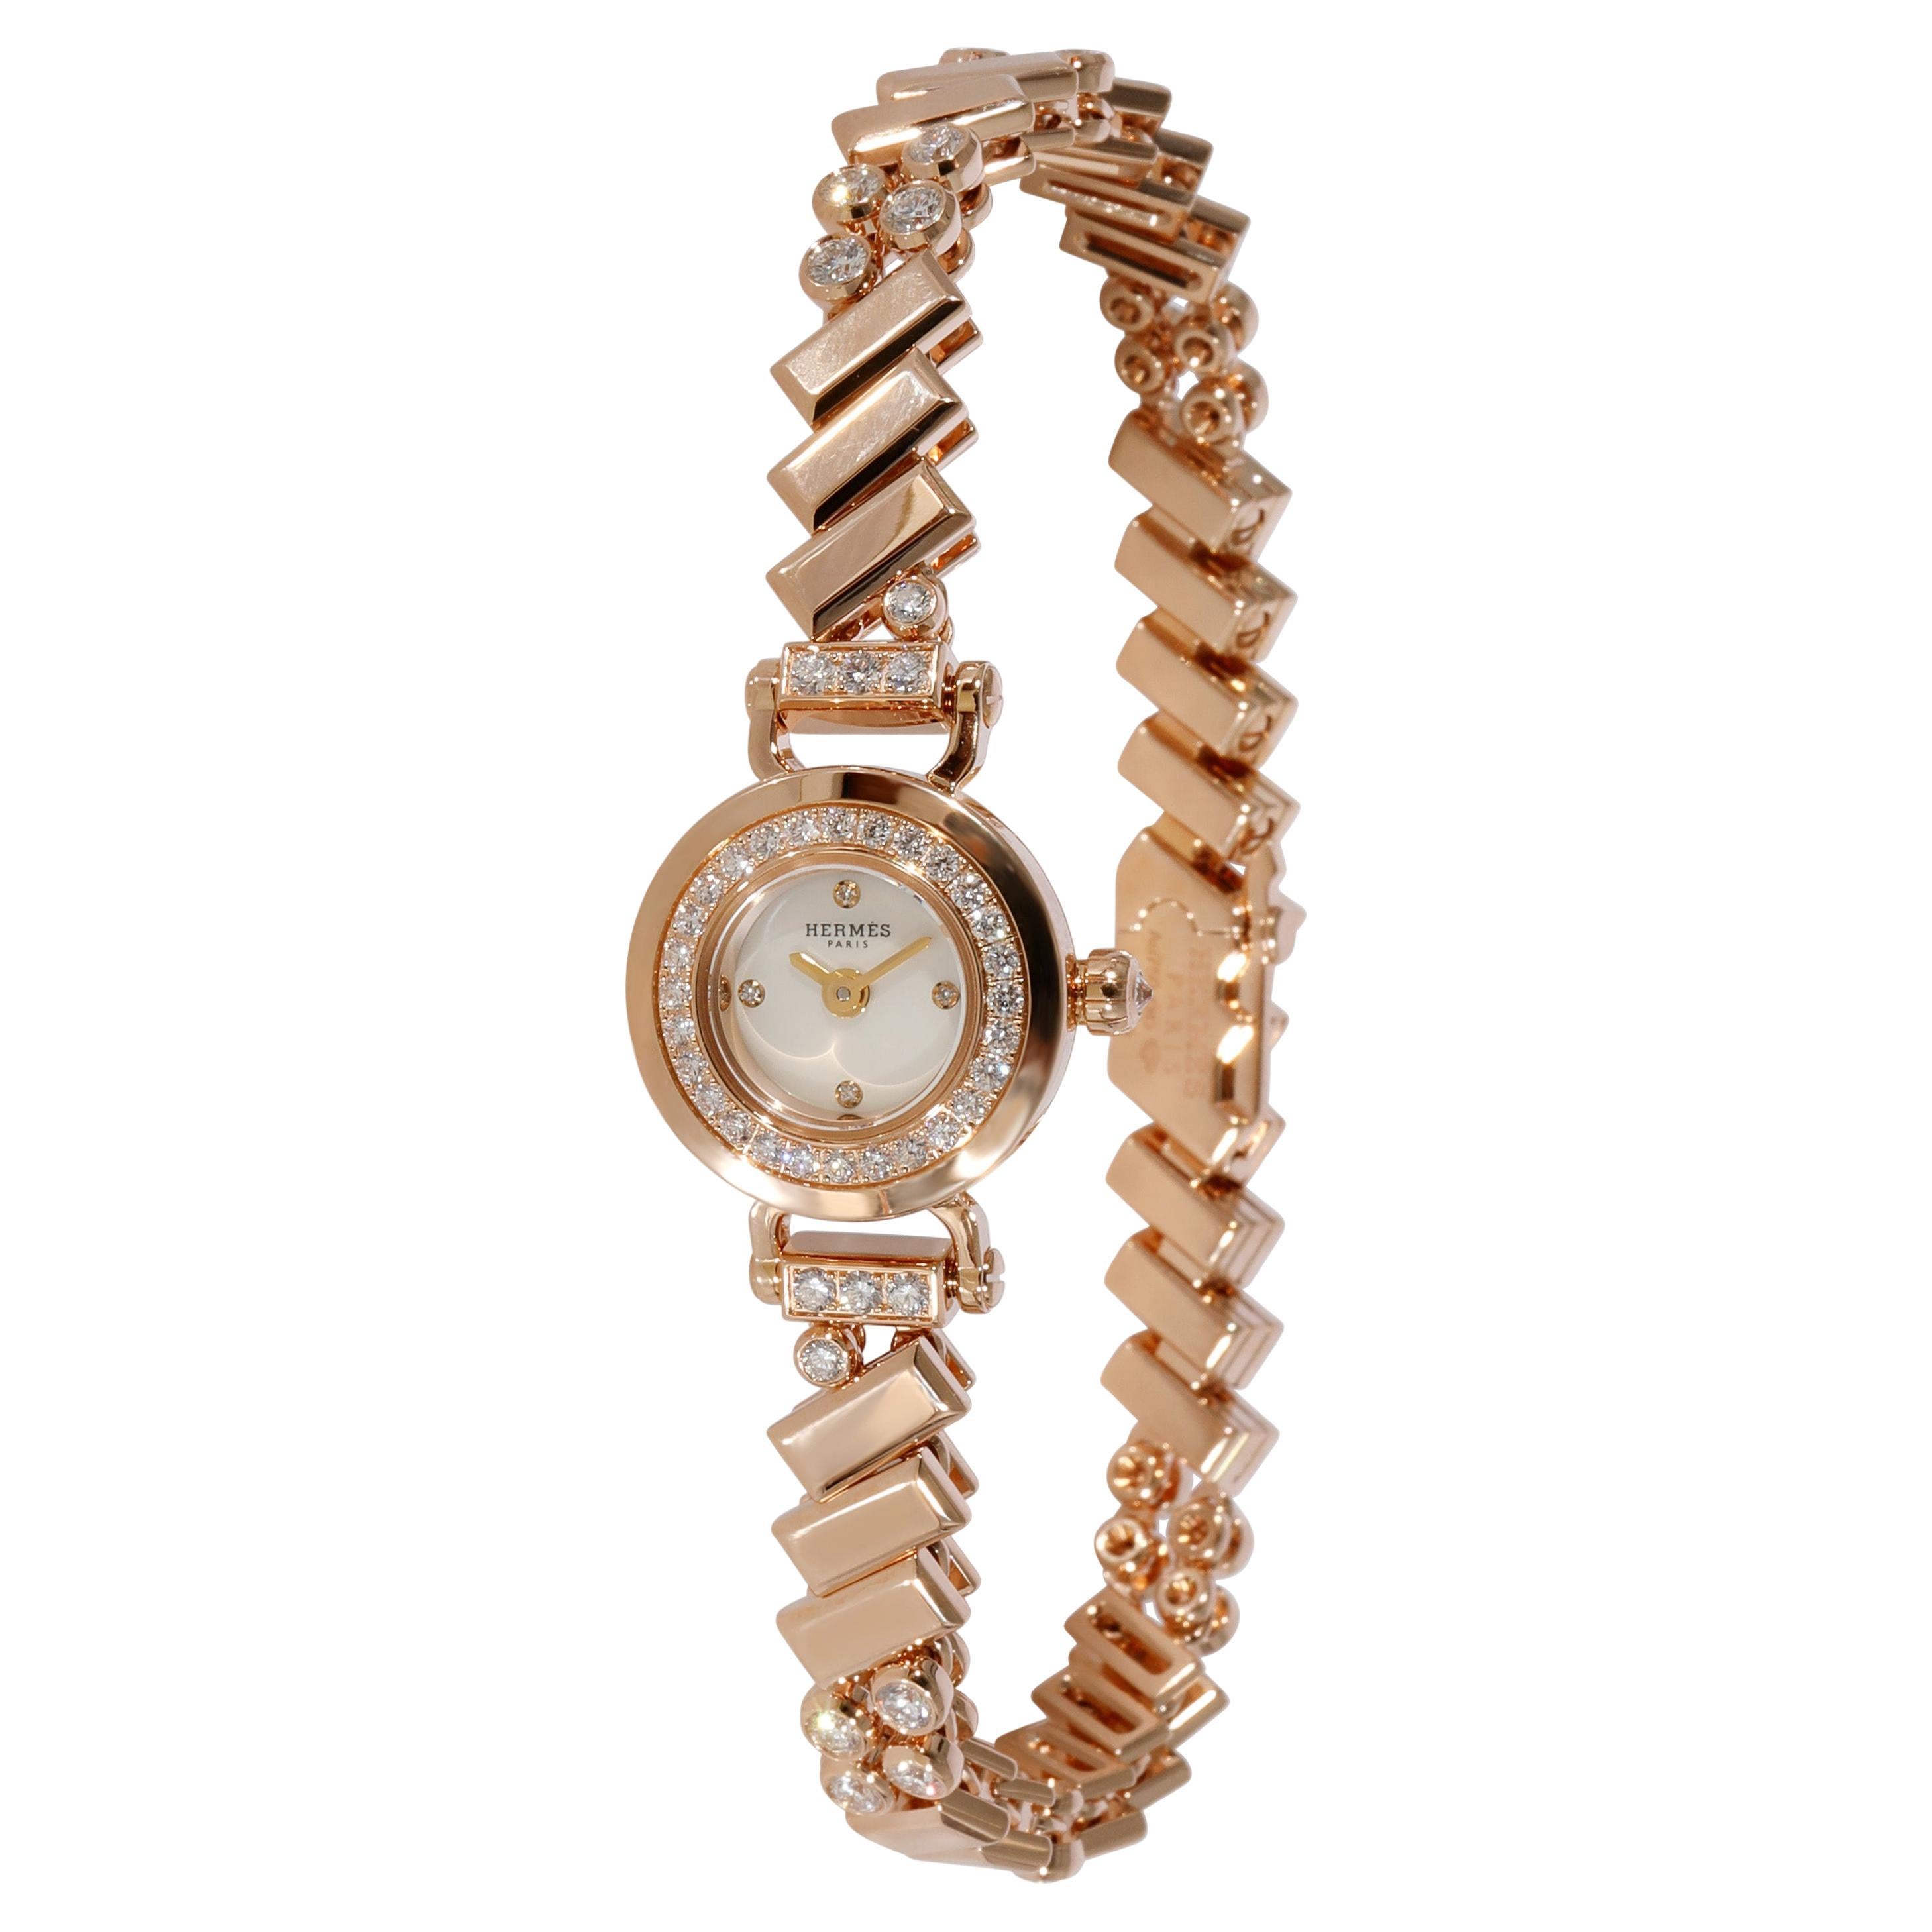 Hermès Faubourg Polka W055926WW00 Women's Watch in Rose Gold